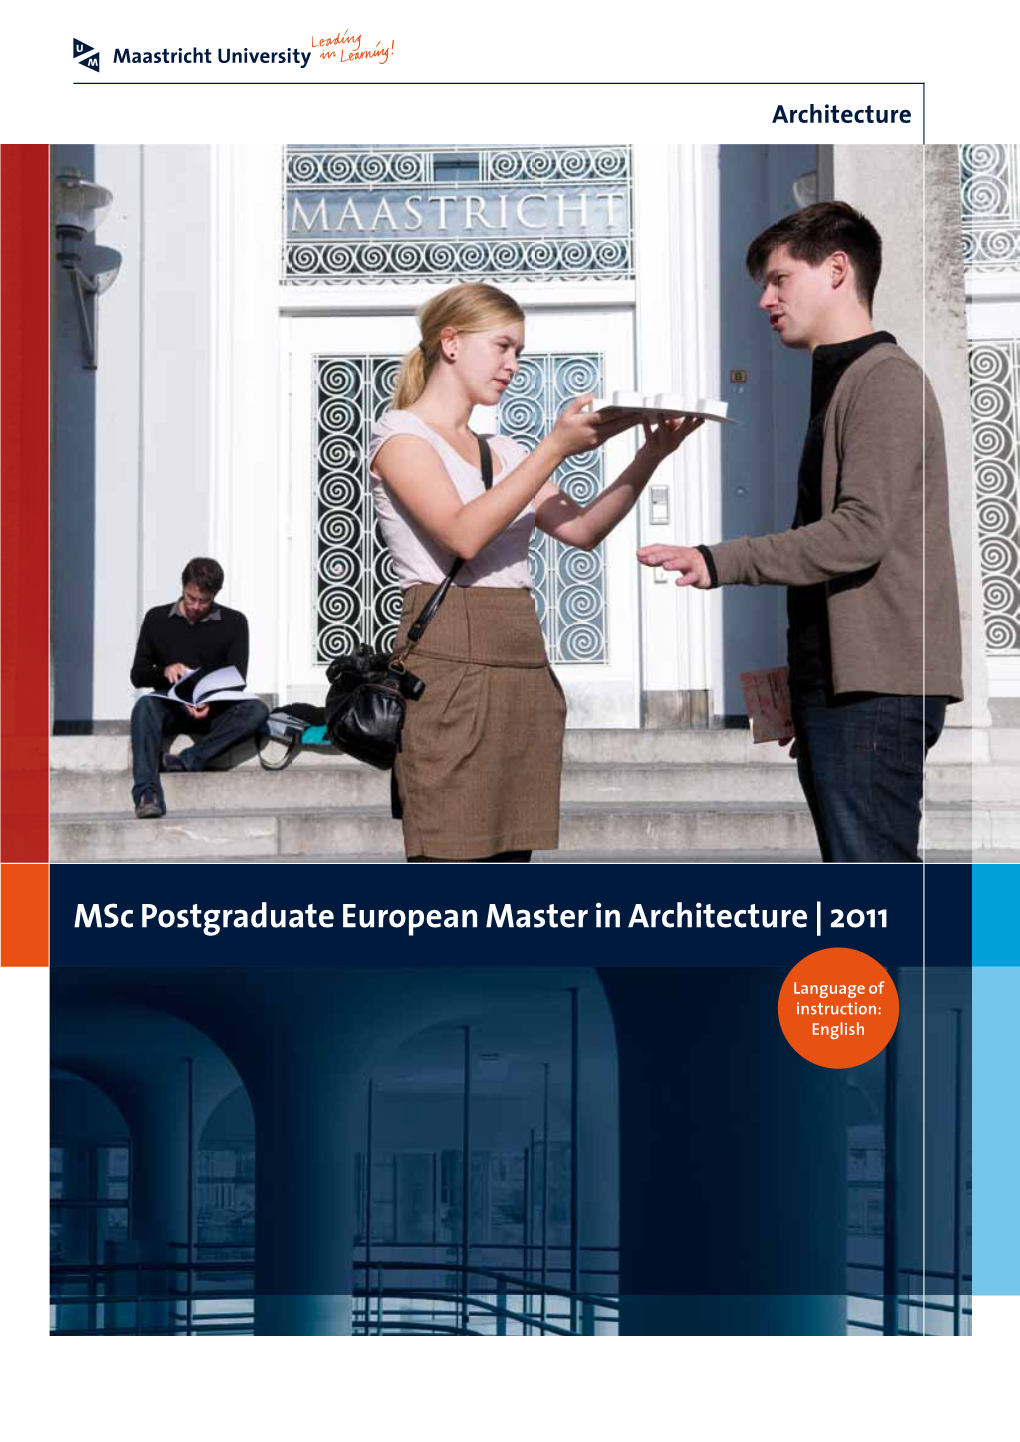 Msc Postgraduate European Master in Architecture | 2011